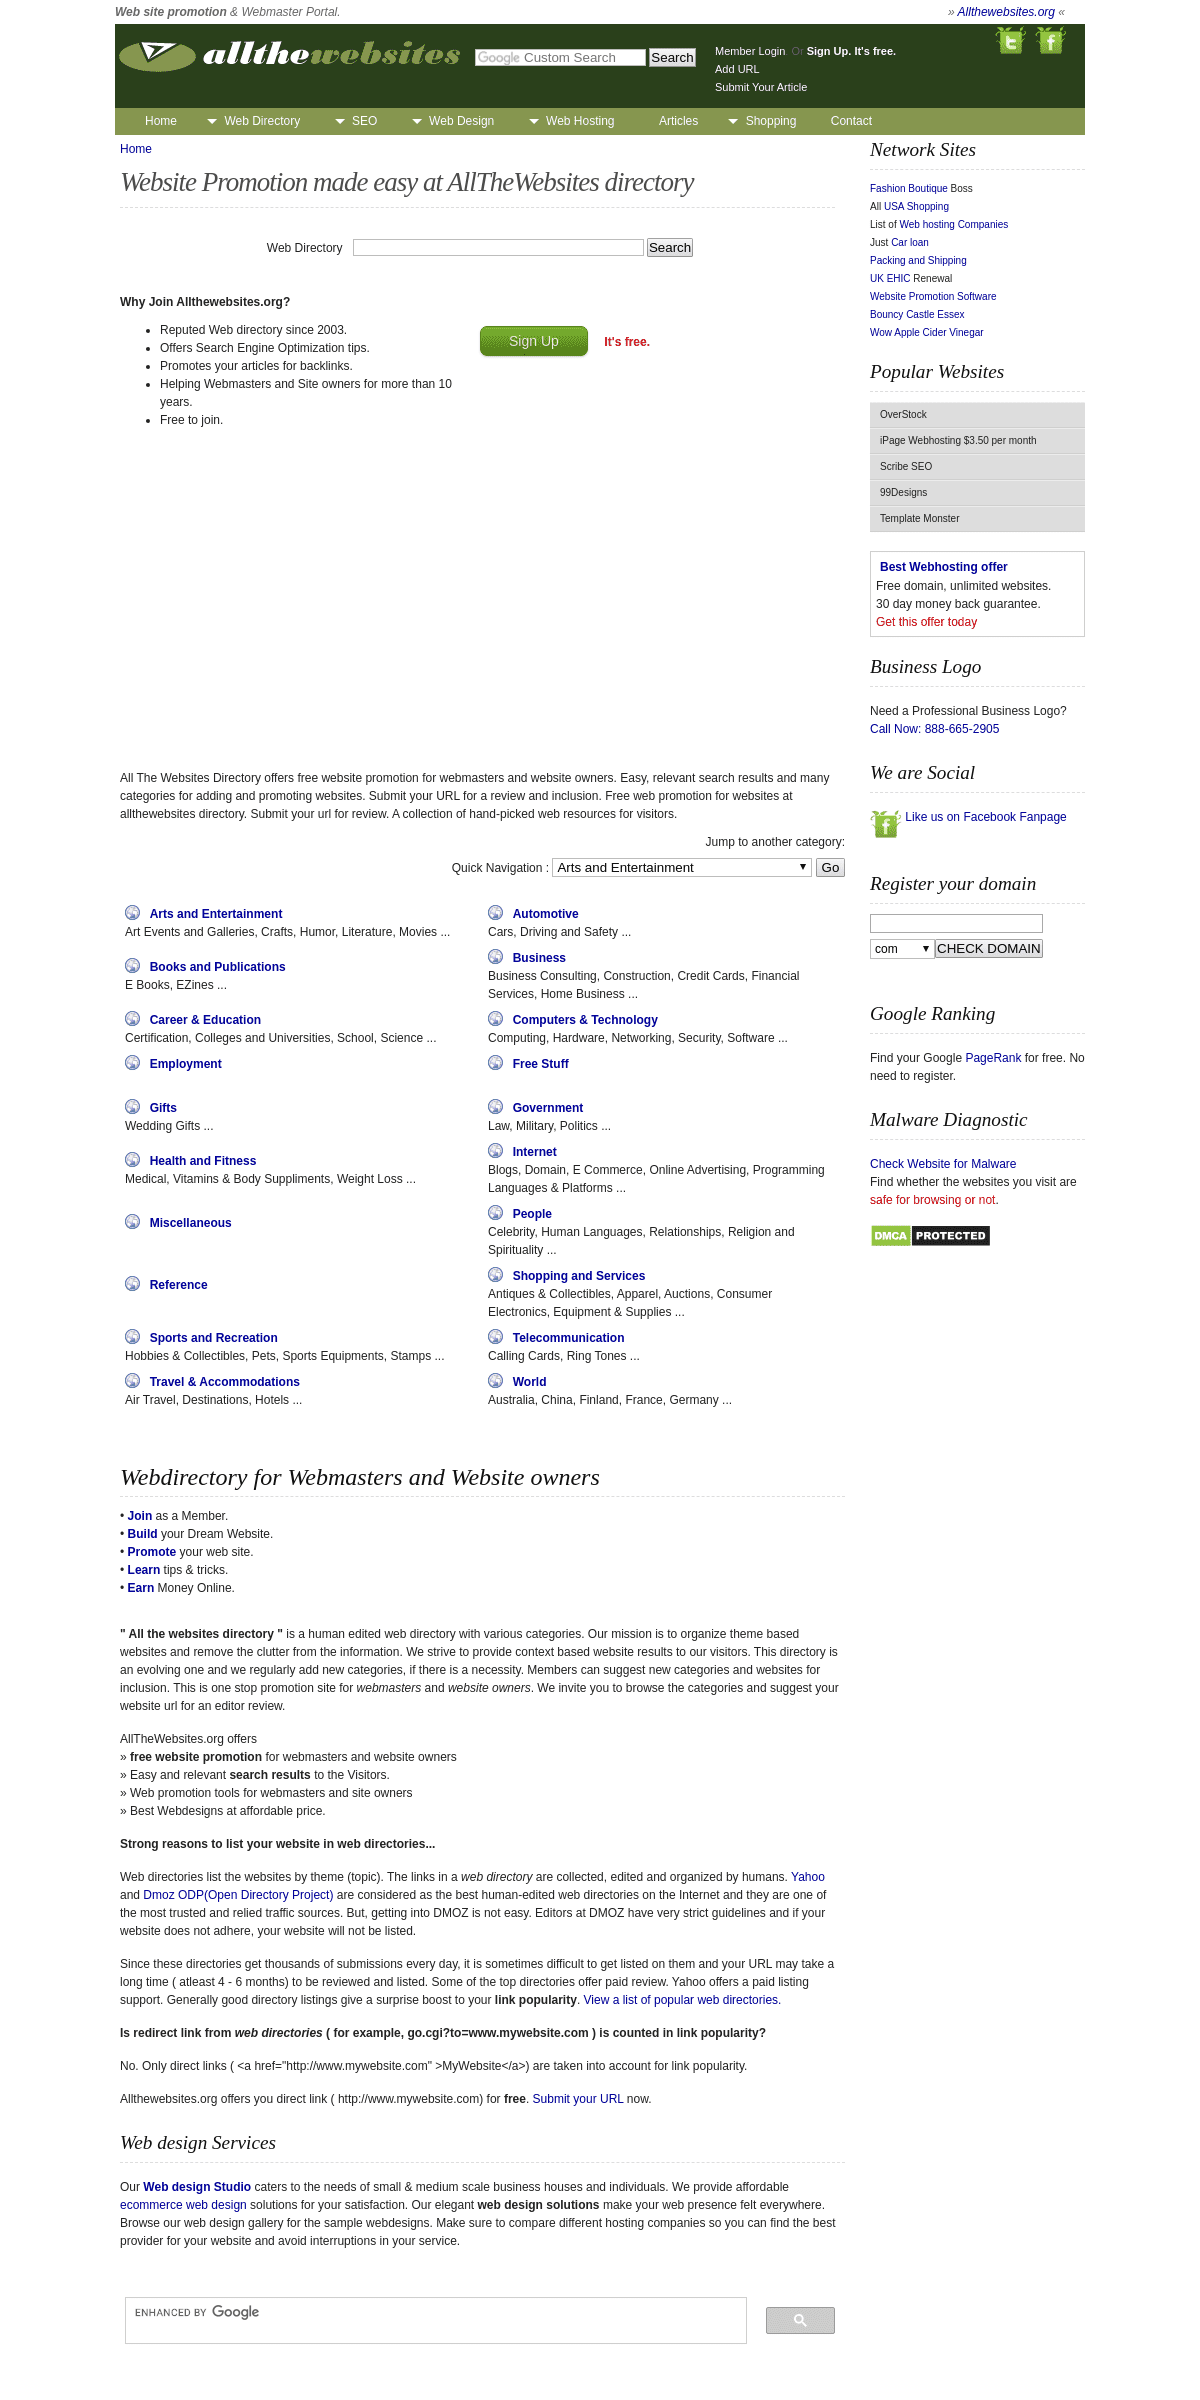 A complete backup of allthewebsites.org